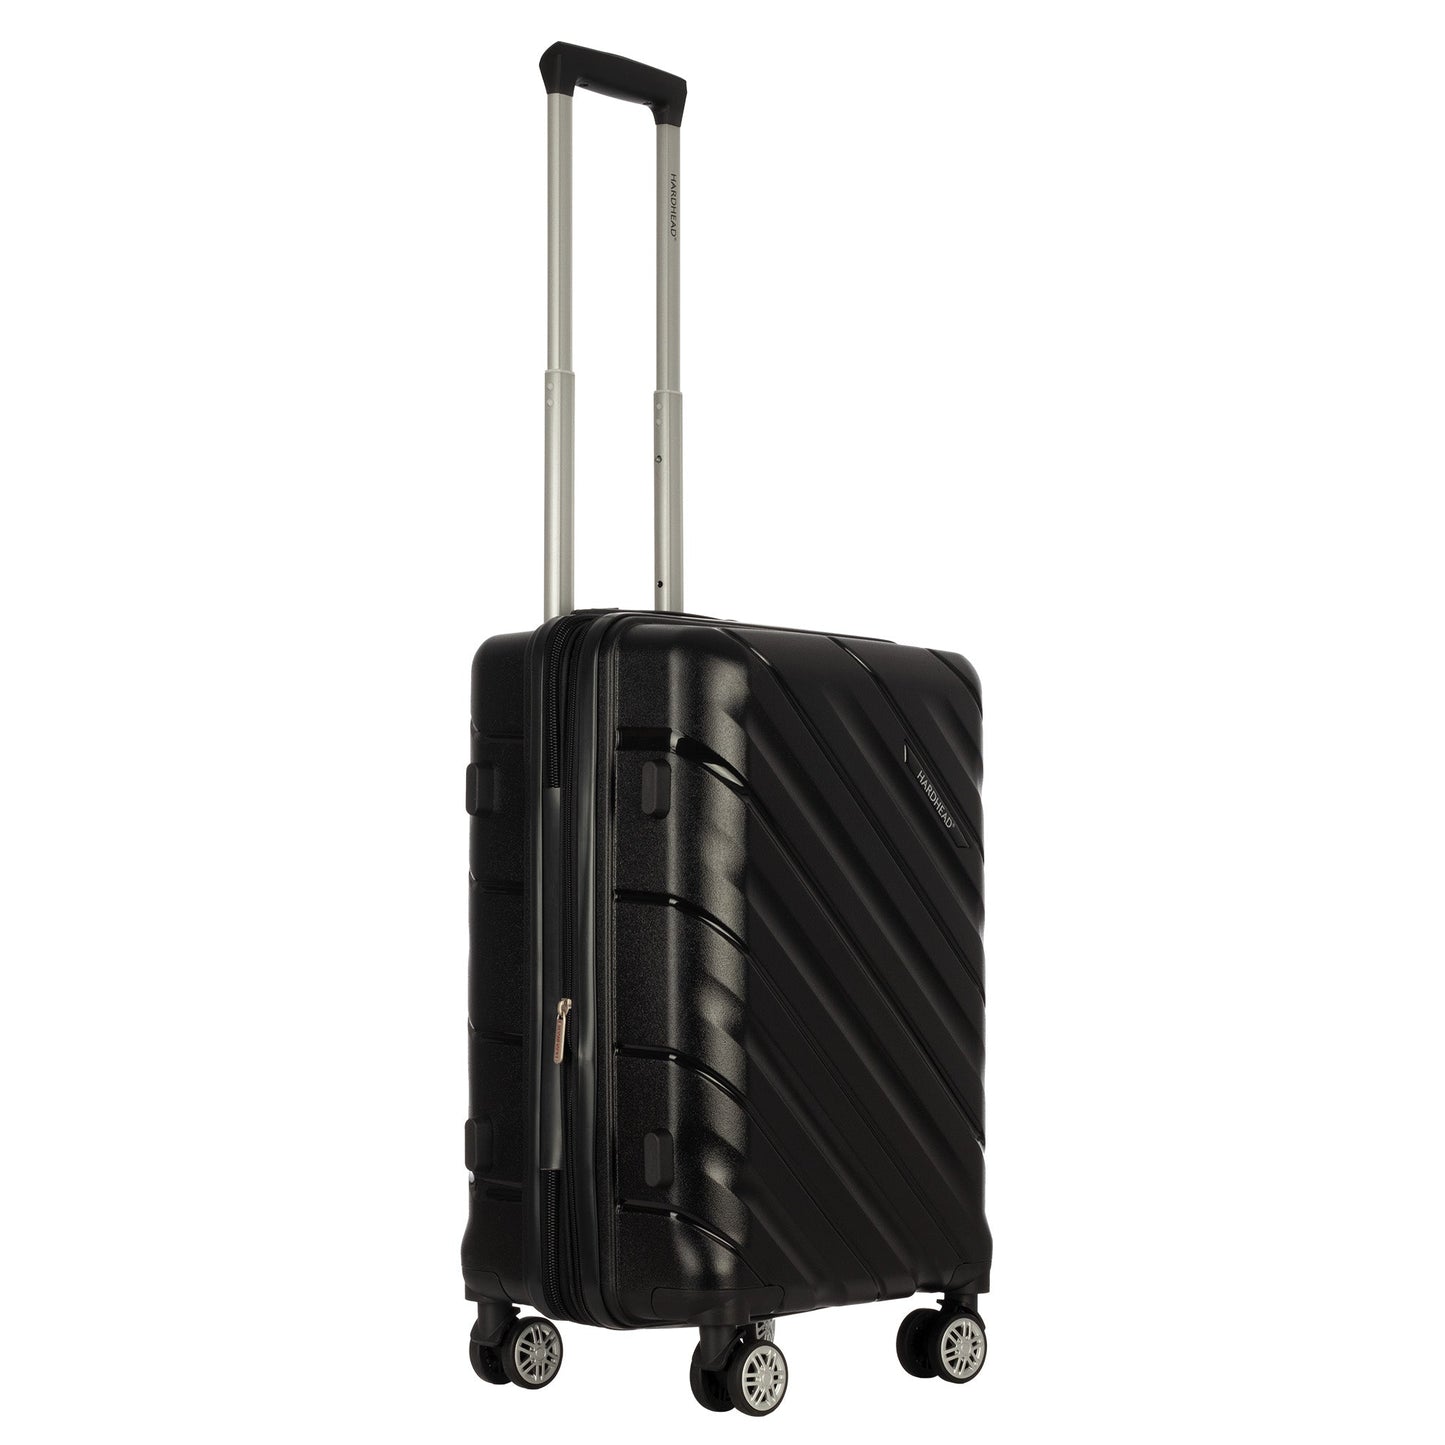 Ian collection black luggage (21") Suitcase Lock Spinner Hardshell